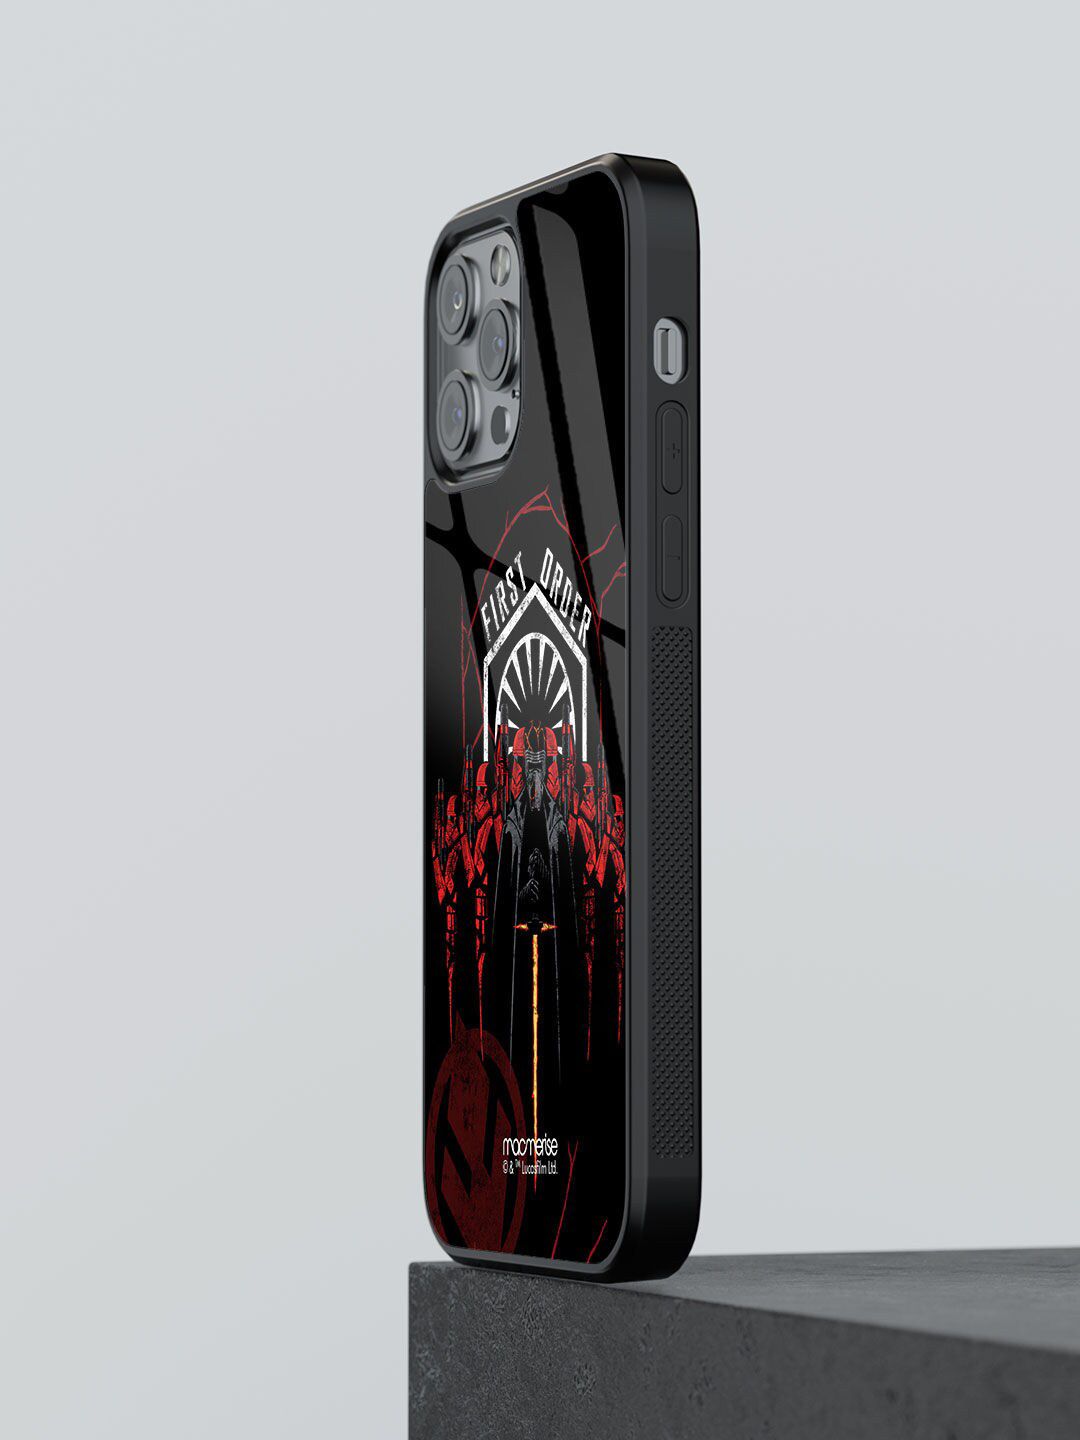 macmerise Black & Red Printed iPhone 12 Pro Max Glass Phone Case Price in India